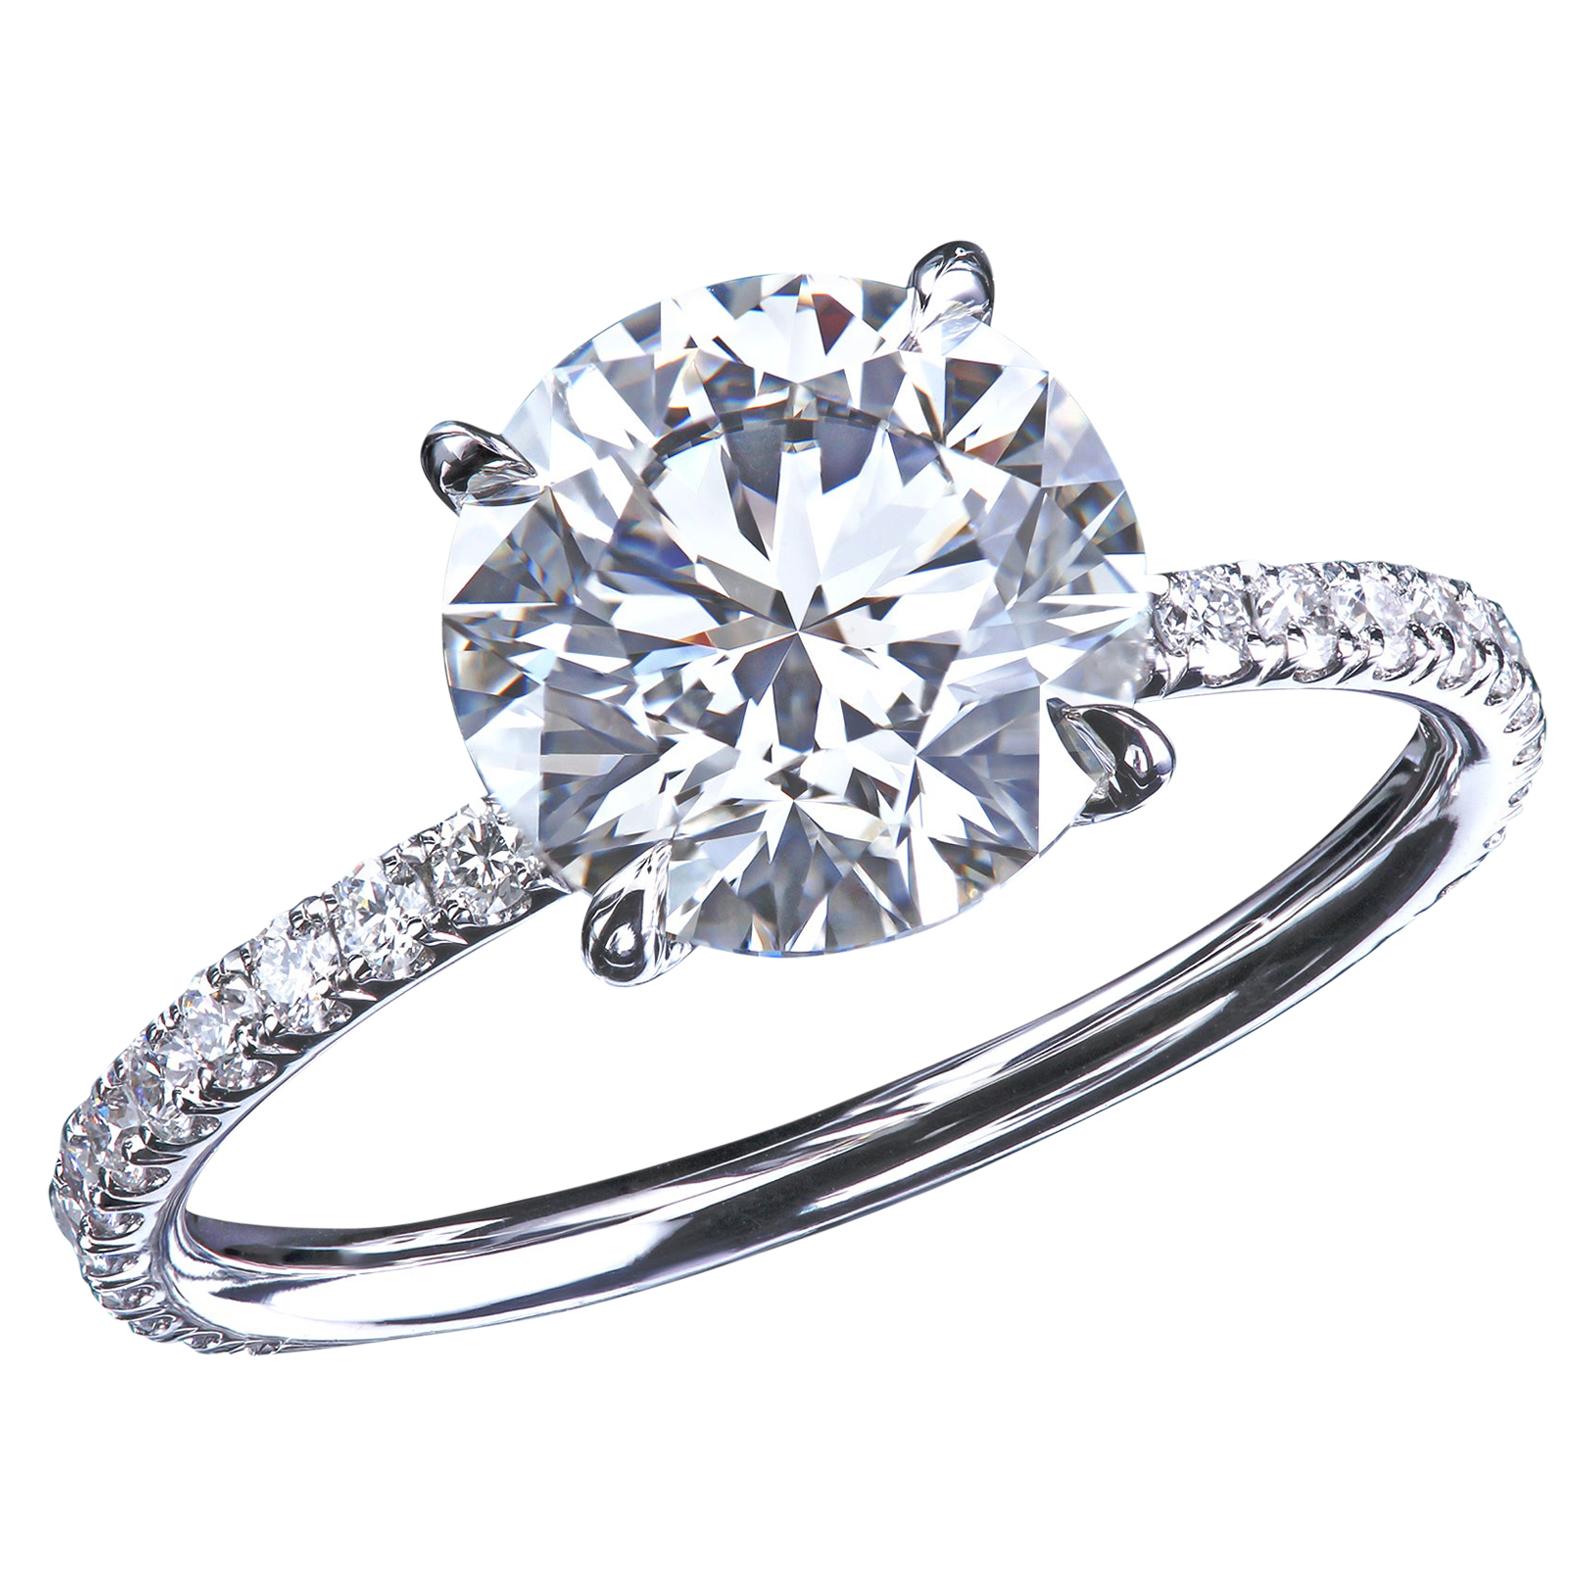 Leon Mege Handmade Platinum Engagement Ring with Round Diamond For Sale